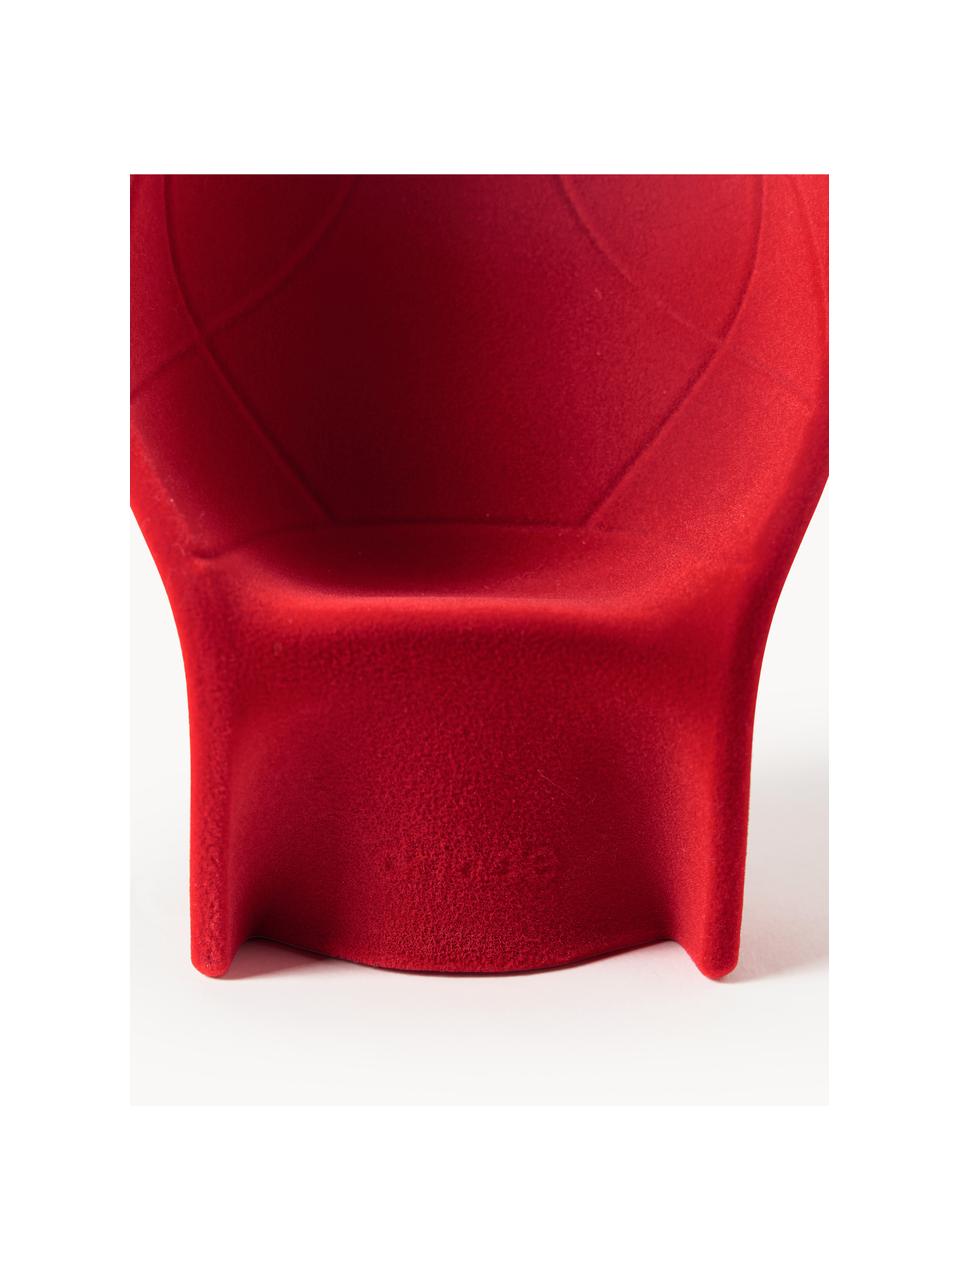 Dekorácia Nemo, Zamat (100 % polyester), Červená, saténová, Ø 11 x V 17 cm